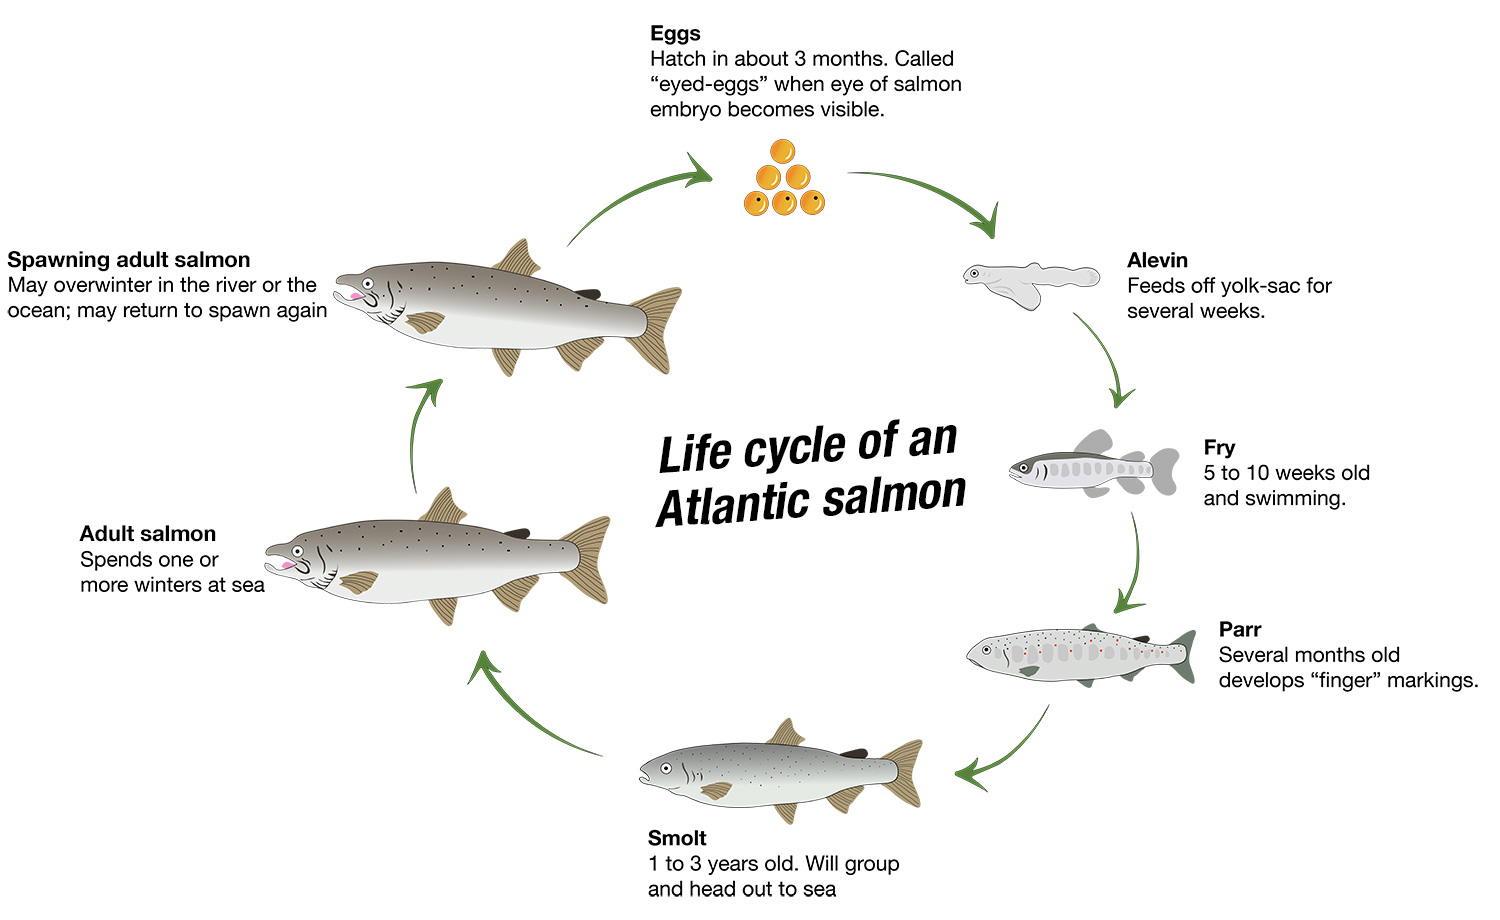 Life cycle of an Atlantic salmon